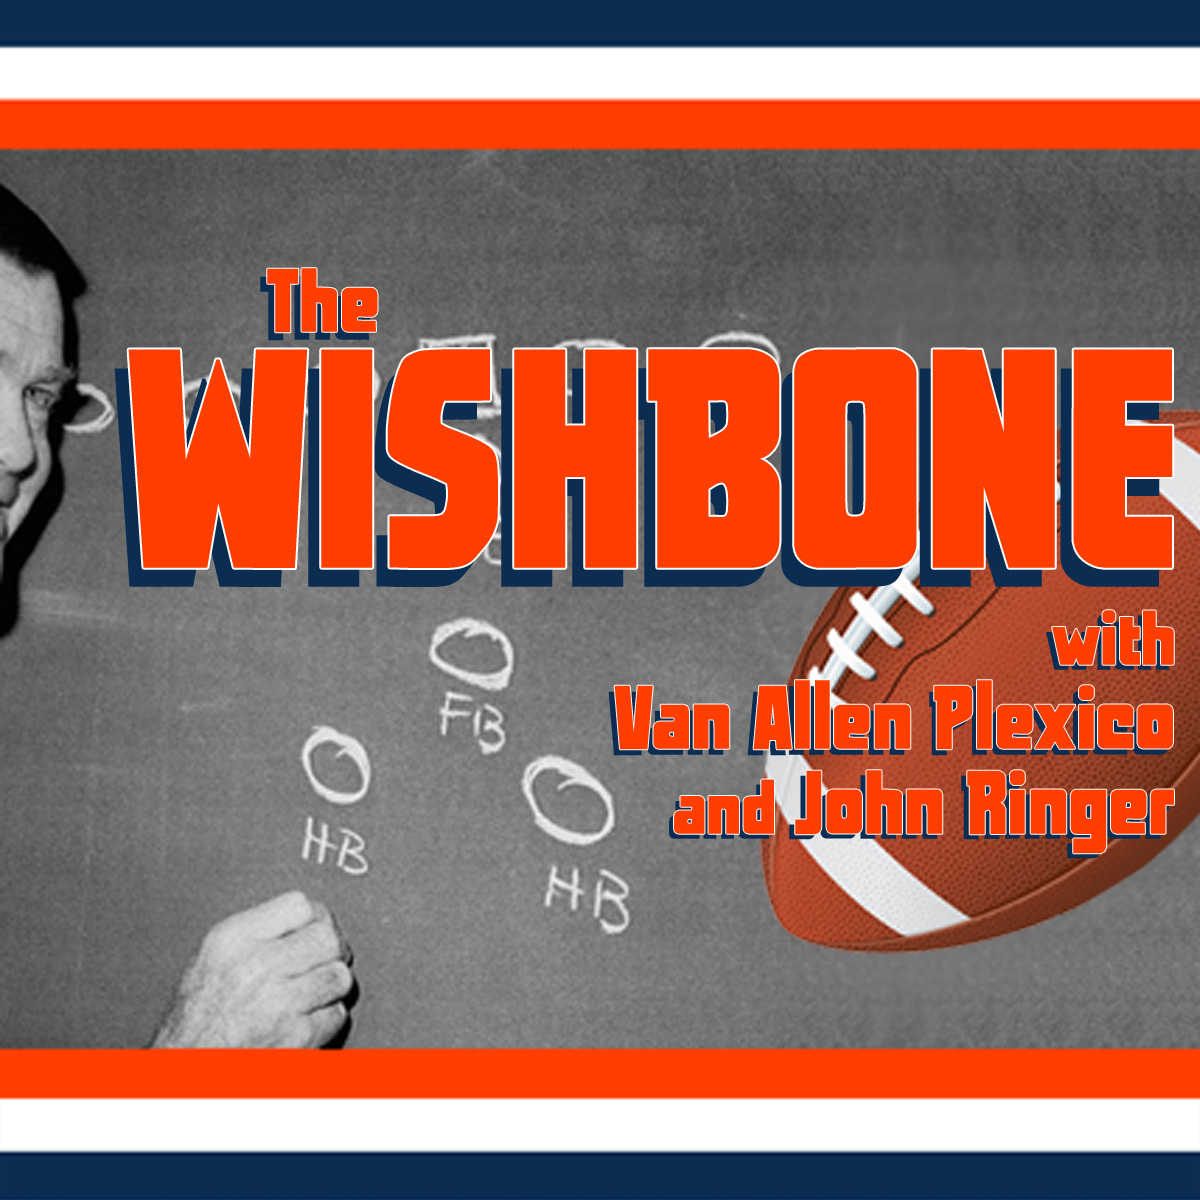 Auburn Wishbone, Oct 7, 2013: Post-Ole Miss win! Pre-WCU. And more!